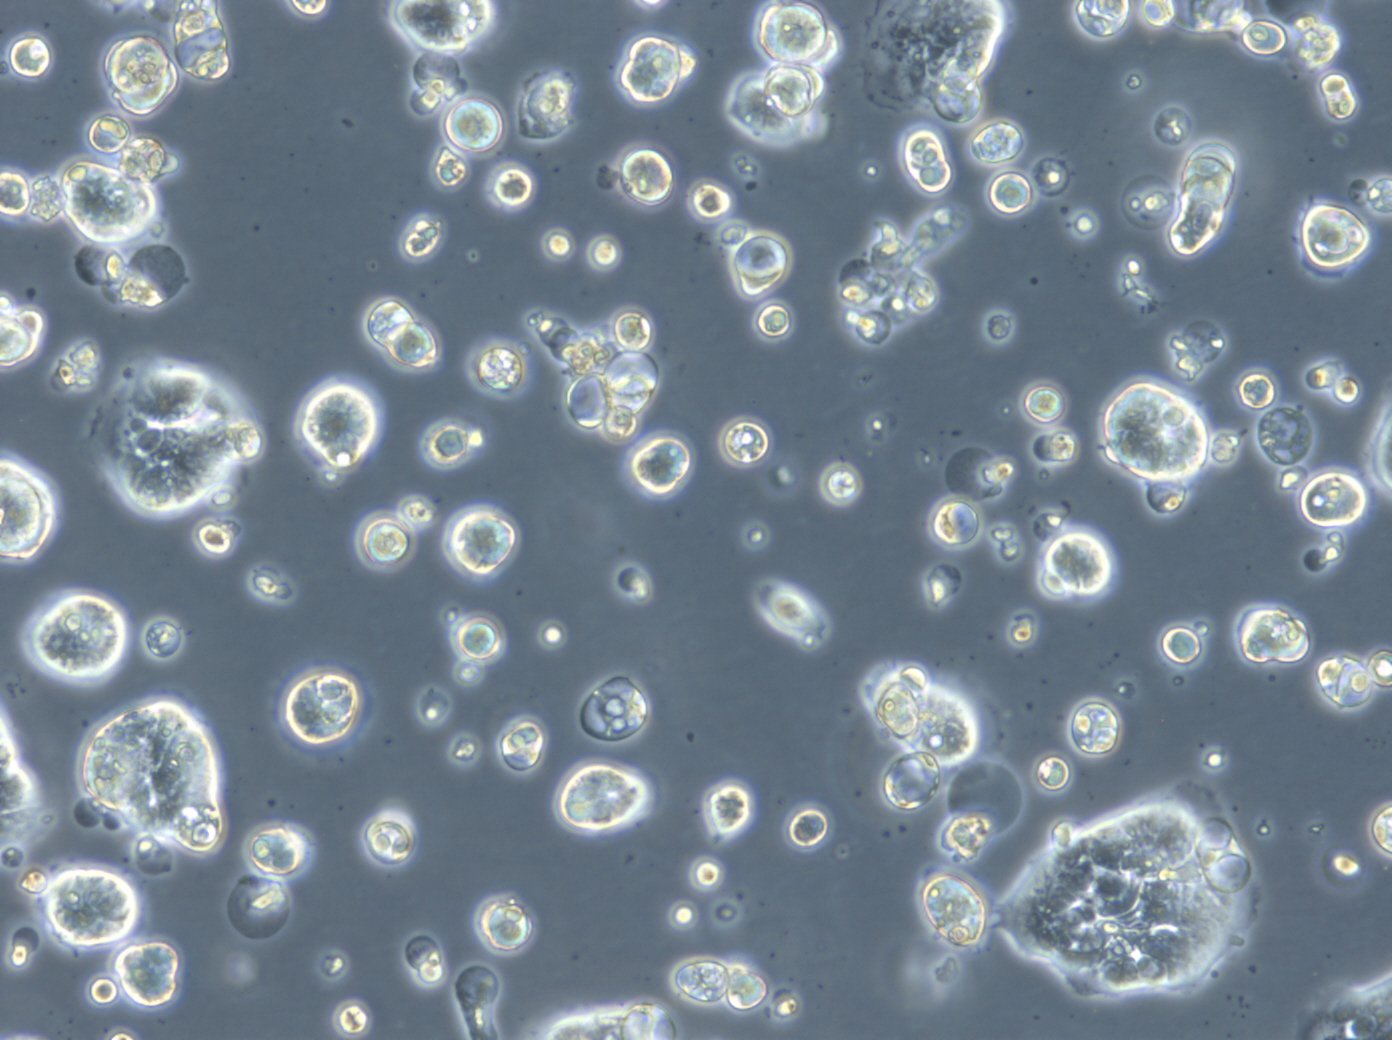 Cellules HROC183